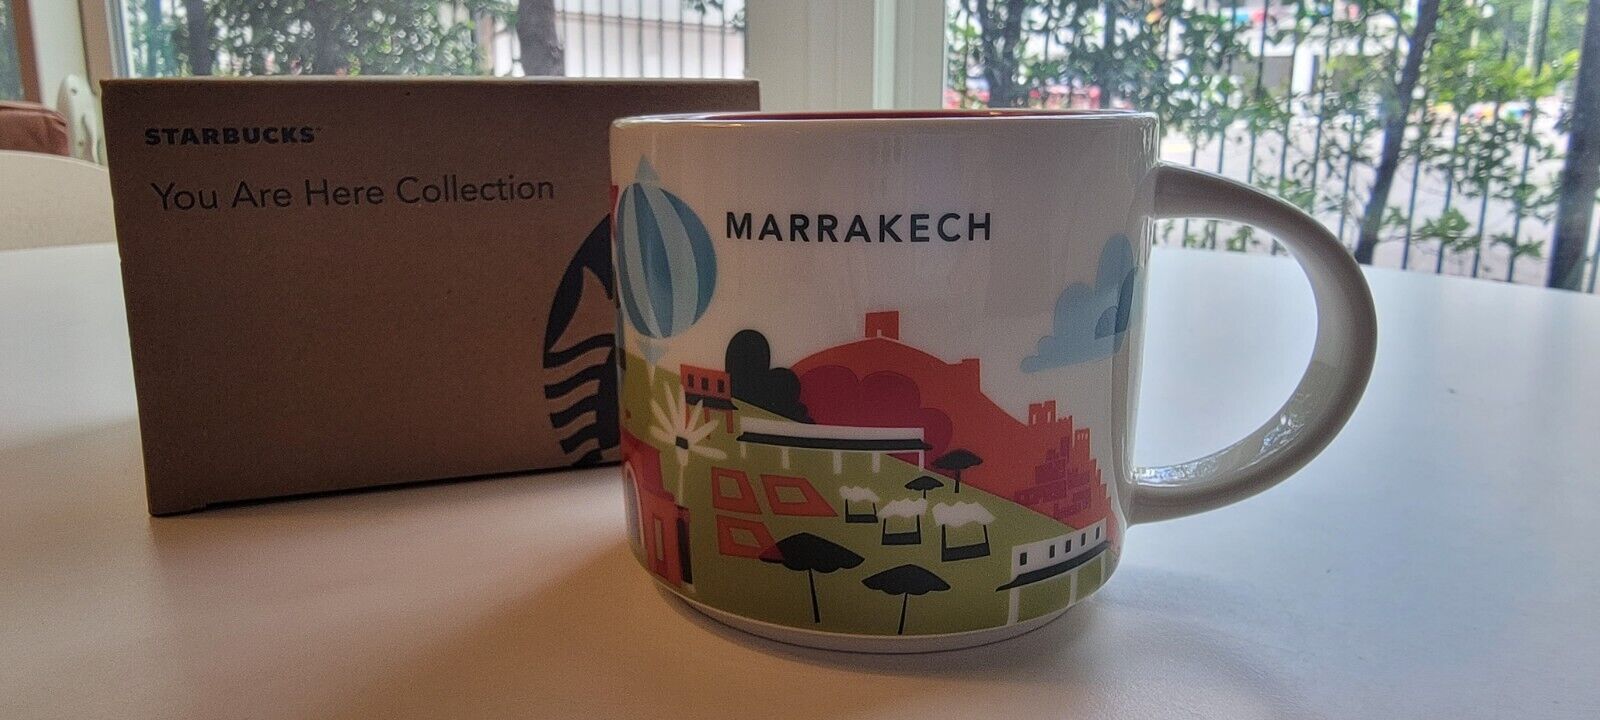 Starbucks MARRAKECH Morocco - You Are Here Collection - Coffee Mug Cup 14oz RARE